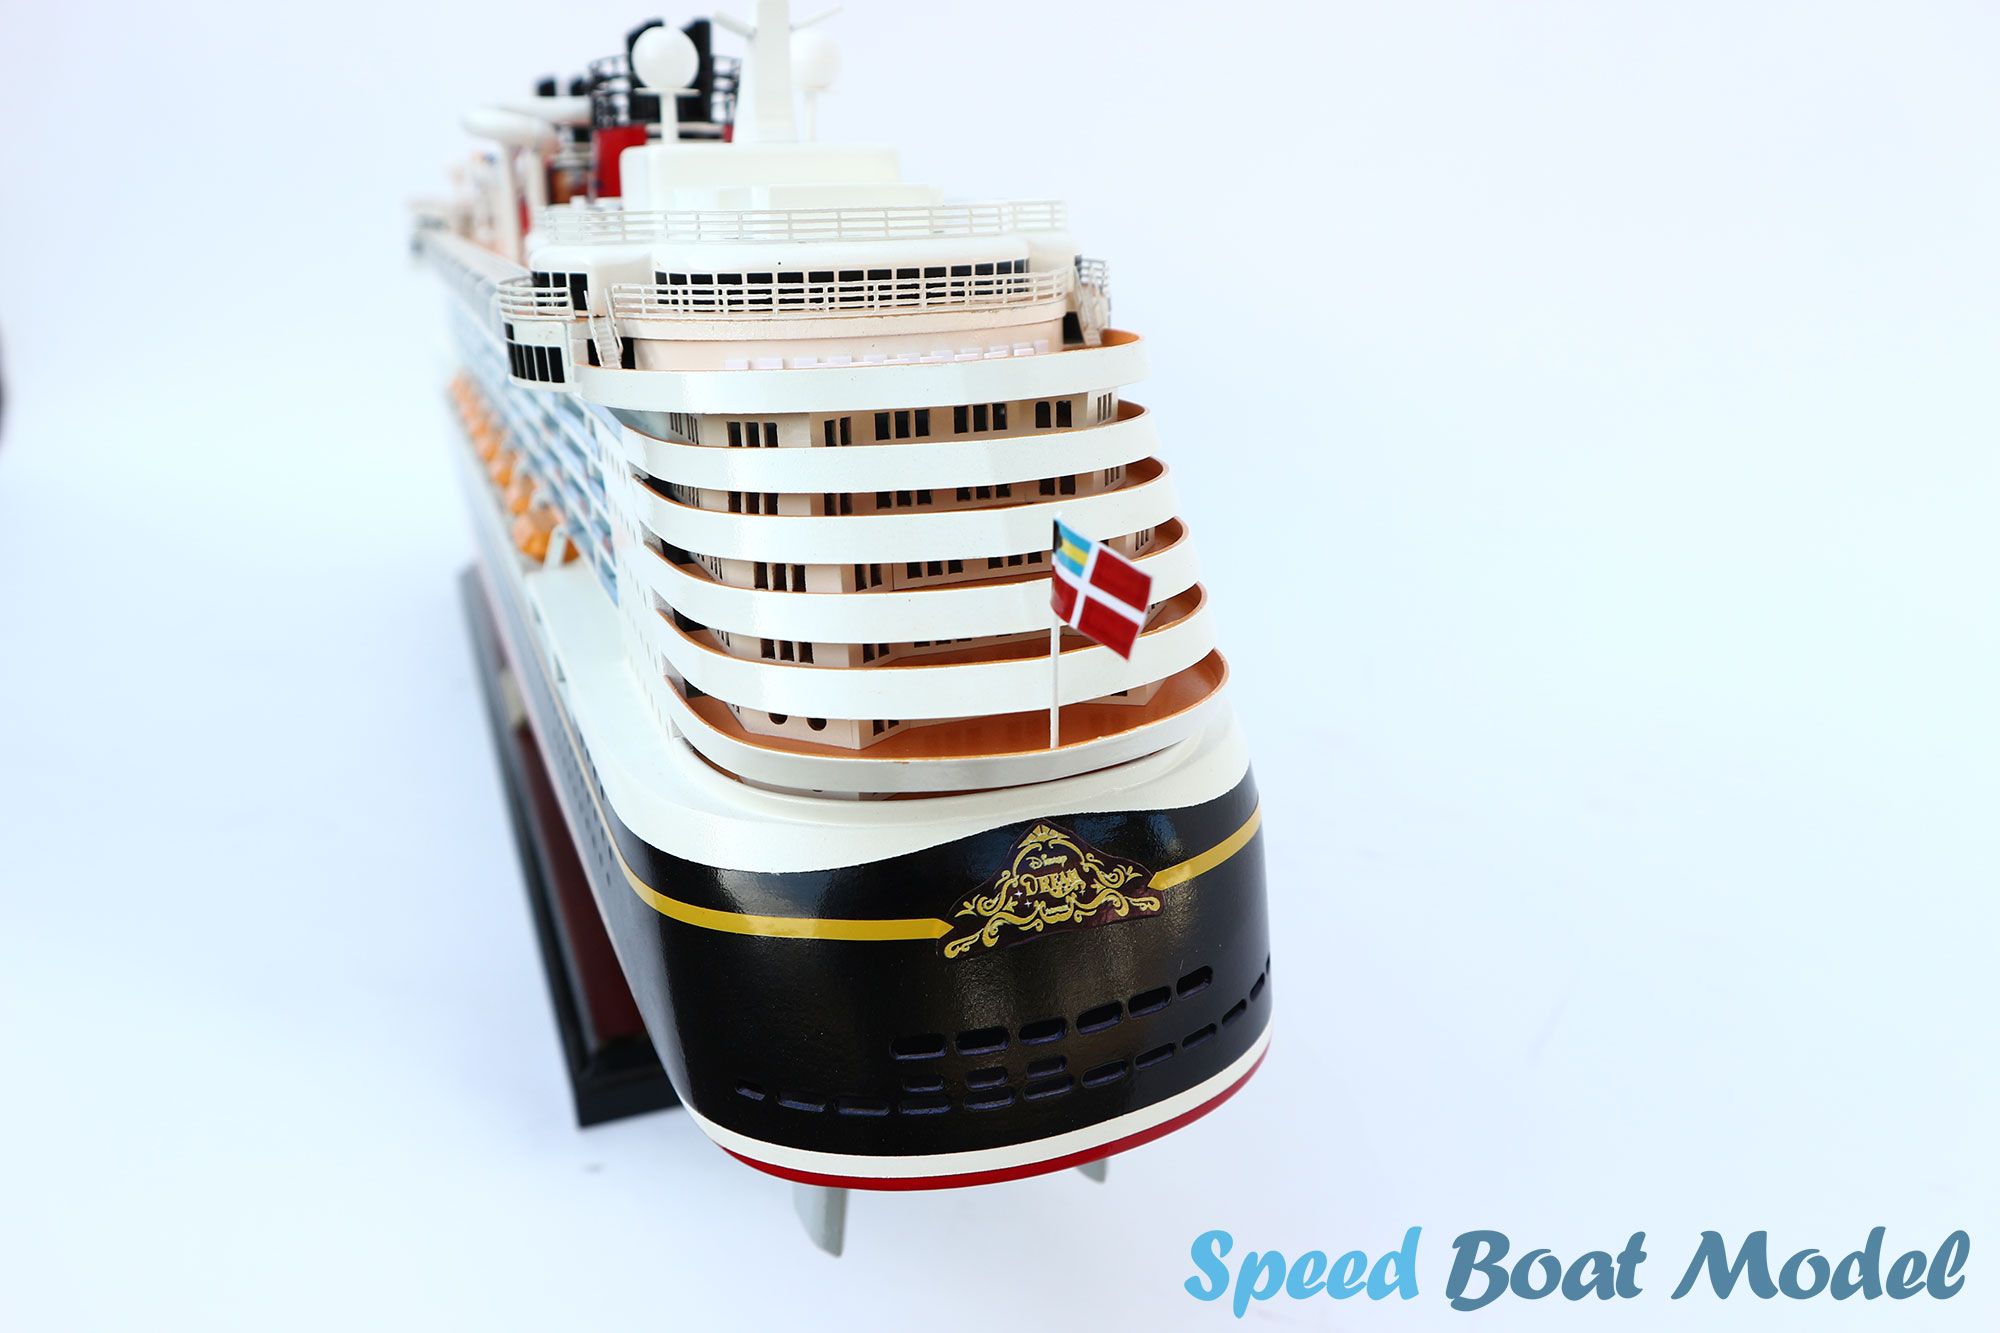 Disney Dream Cruise Ship Model 32.2"